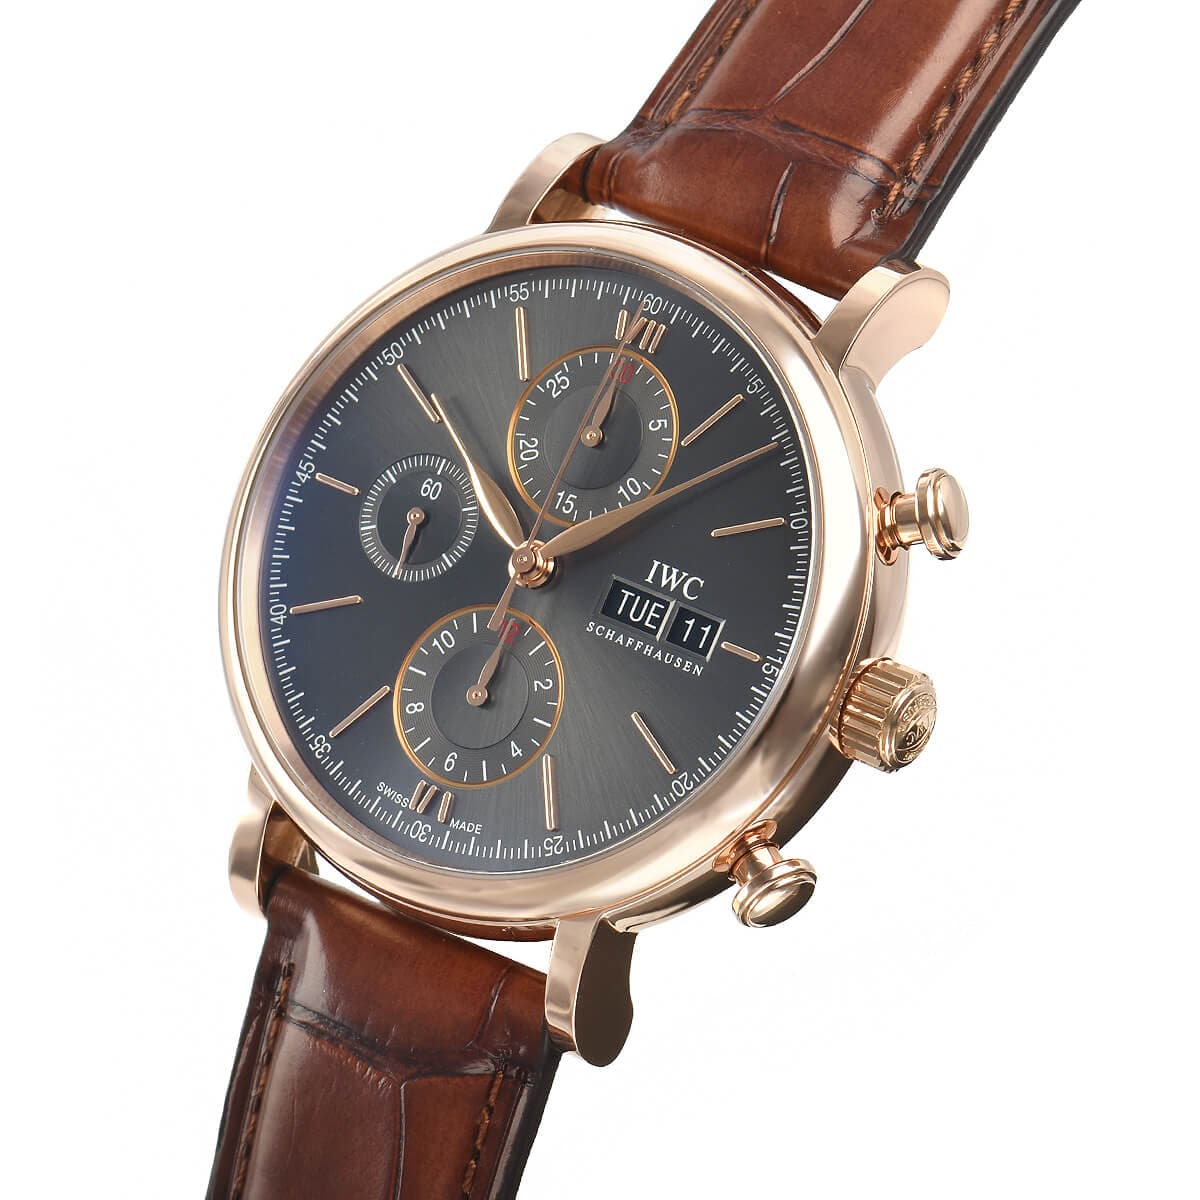 IWC Portofino Chronograph Grey Dial Brown Leather Strap Watch for Men - IW391021